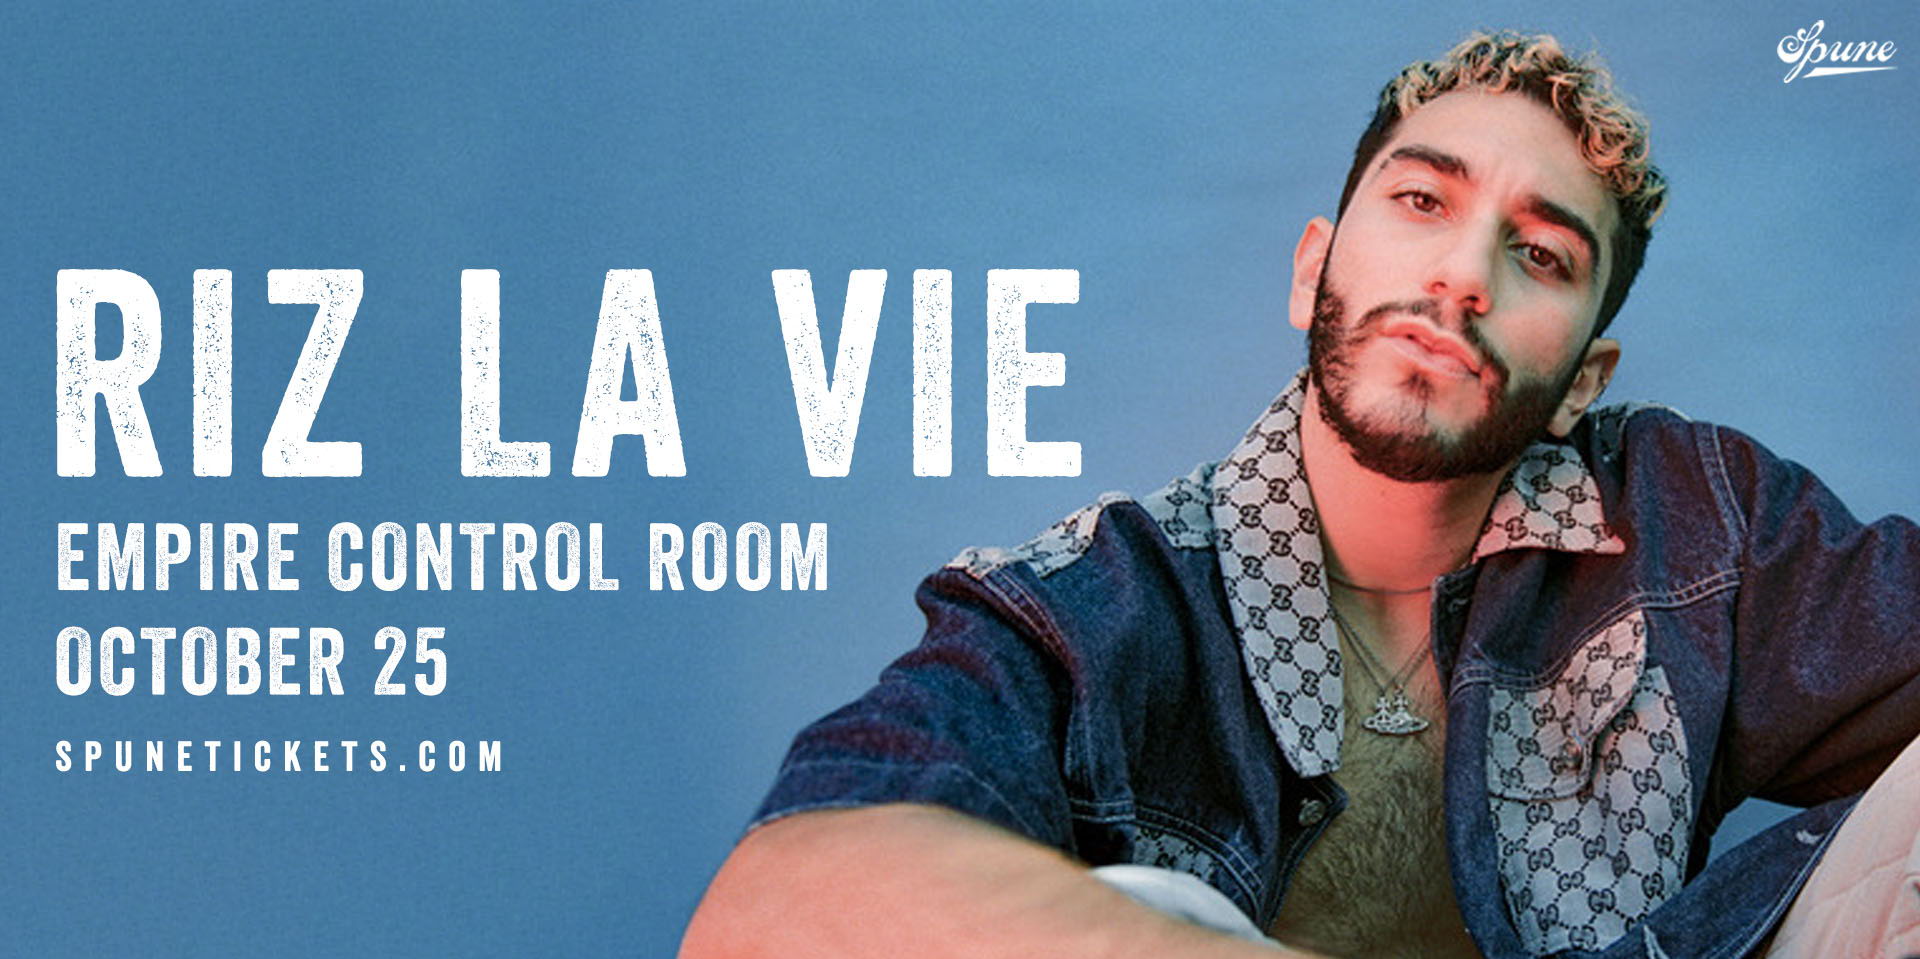  Riz La Vie at Empire Control Room promotional image